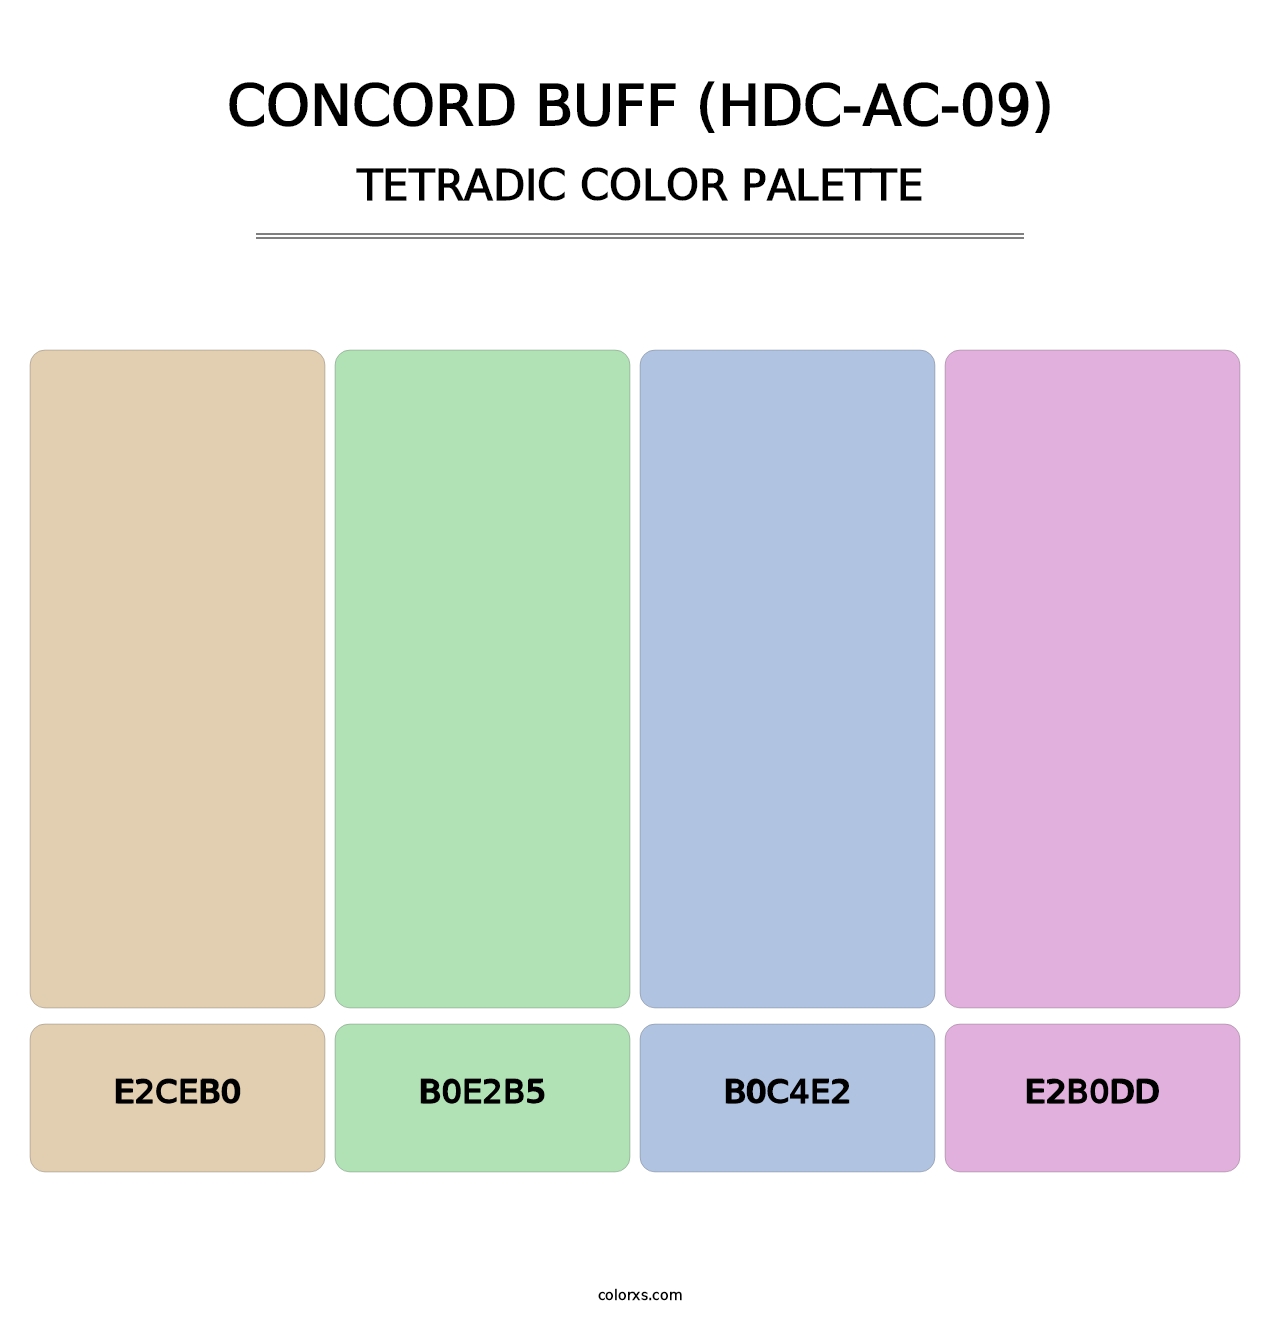 Concord Buff (HDC-AC-09) - Tetradic Color Palette